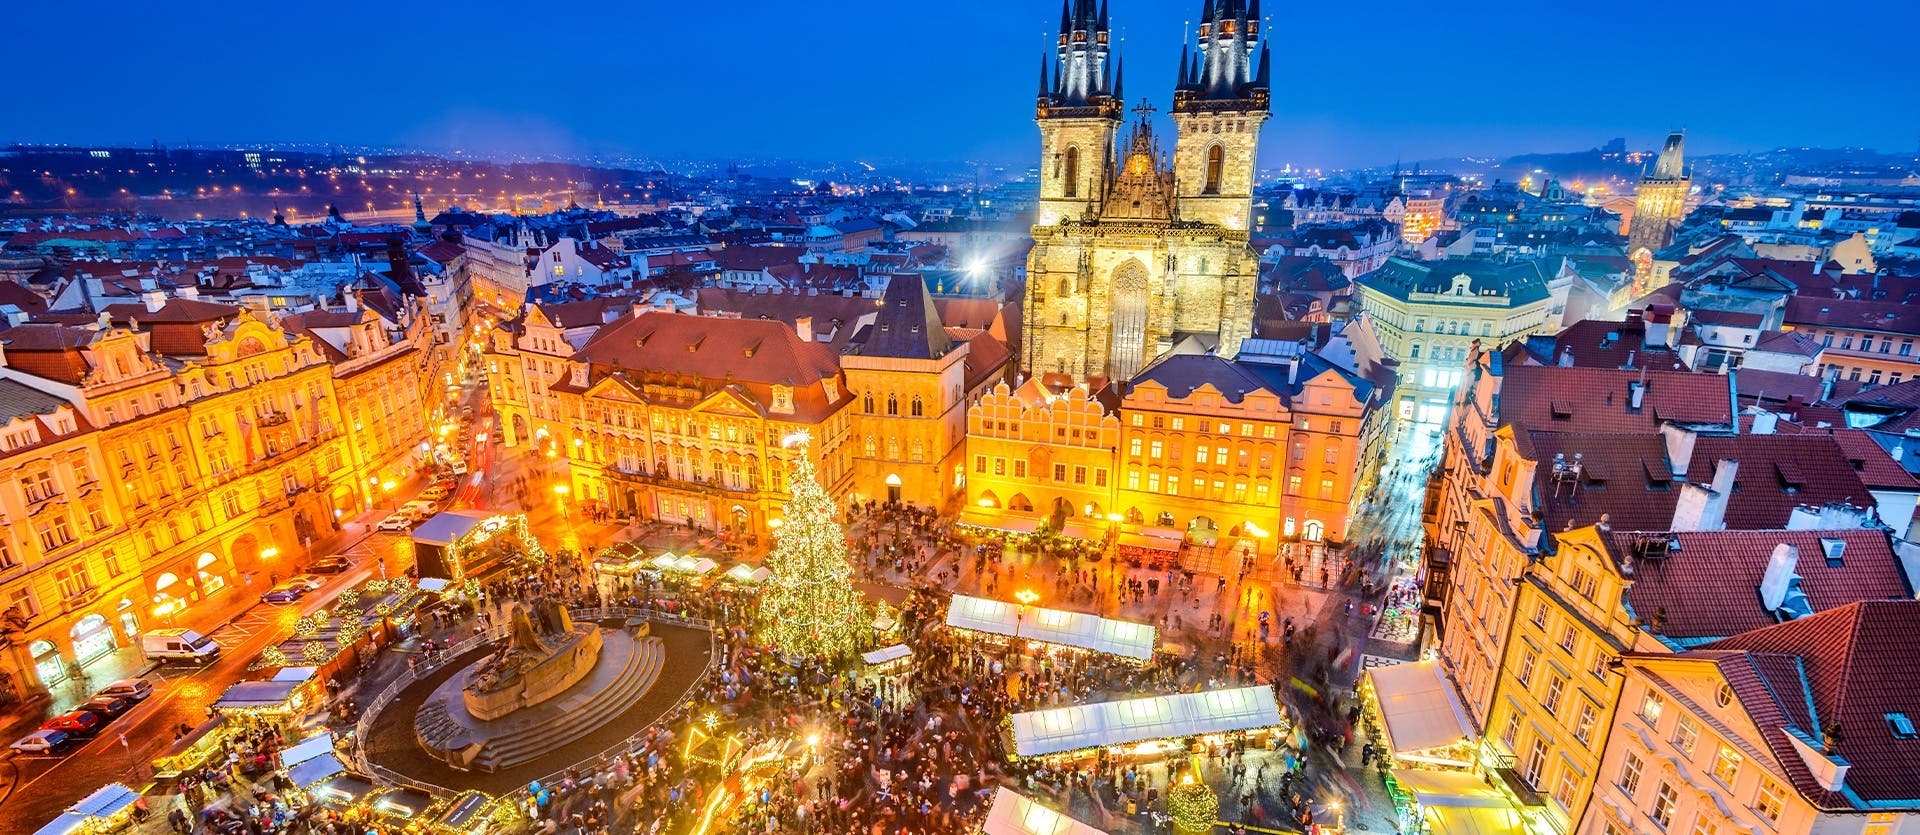 A Christmas Escape to Central Europe